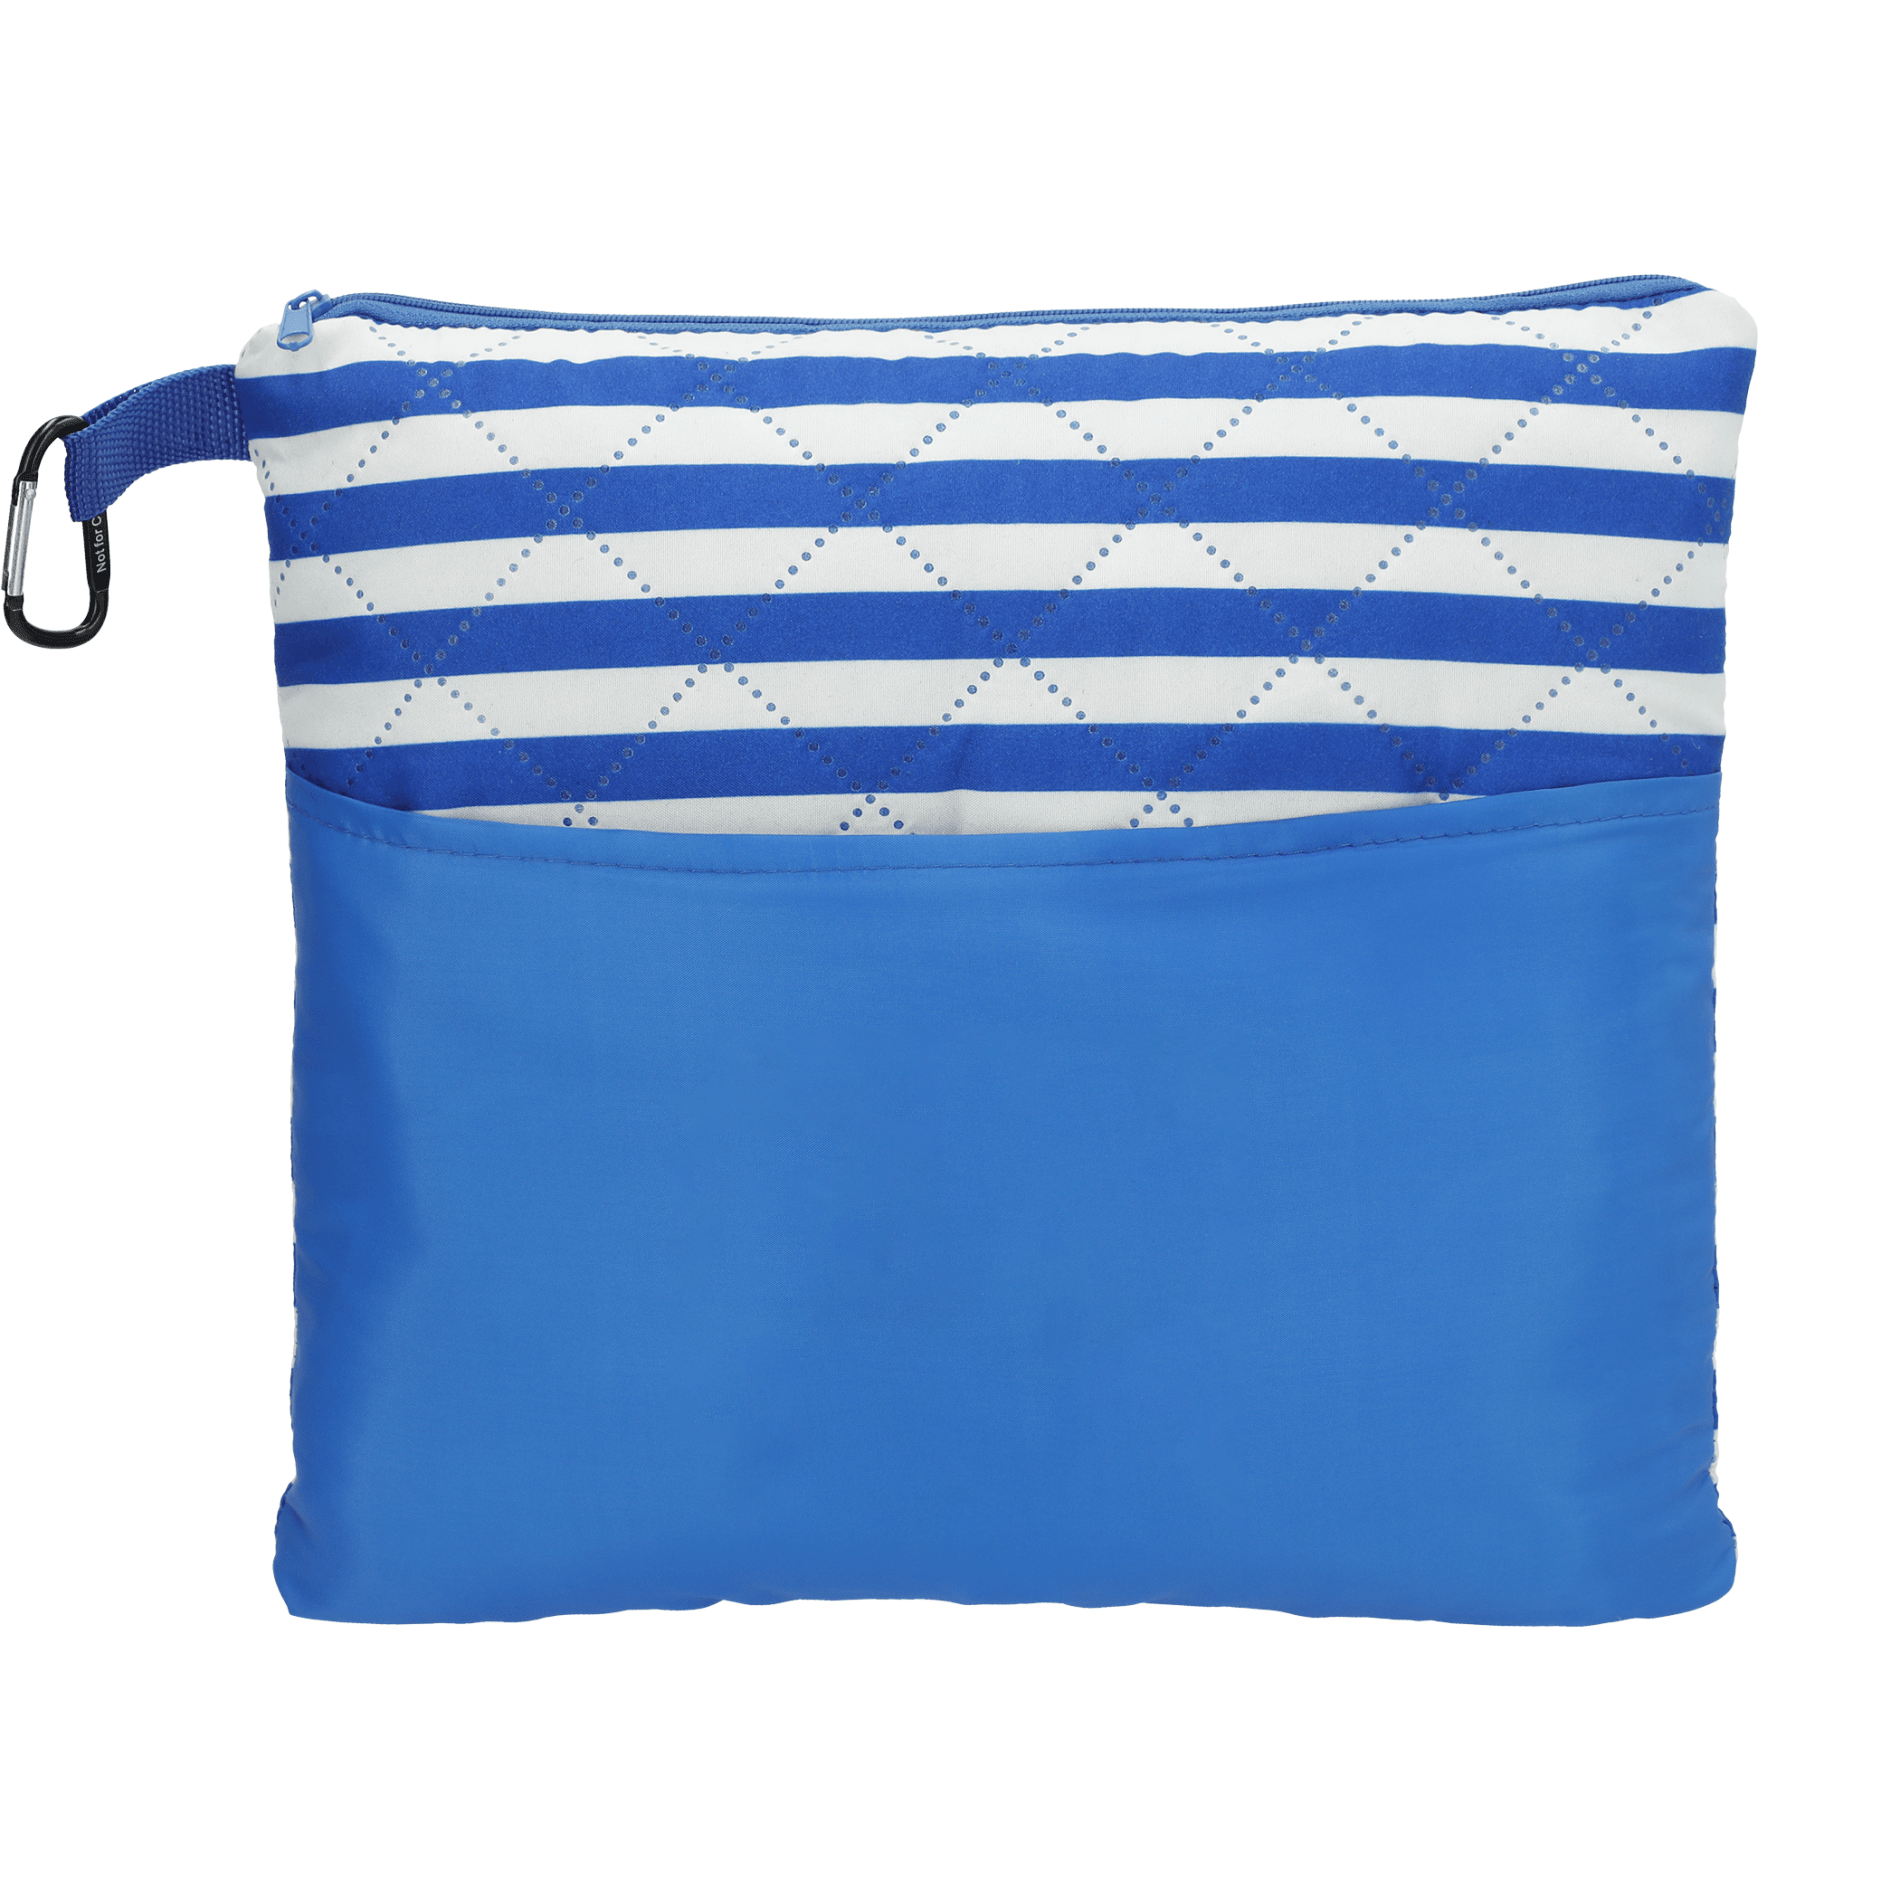 LEEDS 1080-30 - Portable Beach Blanket and Pillow